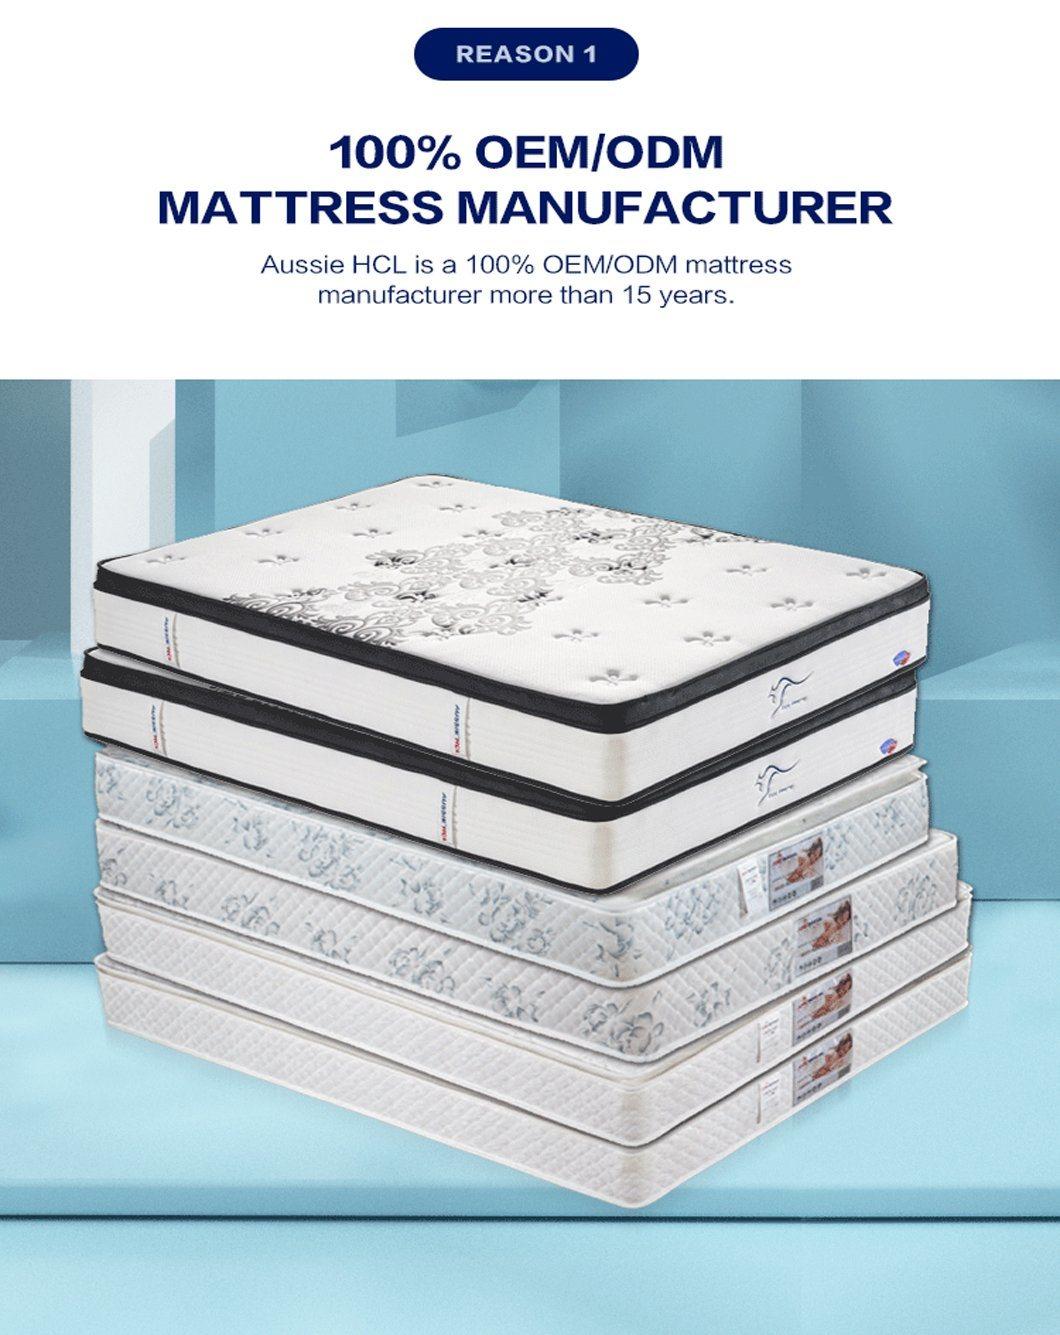 The Best Factory Aussie Foldaway Premium Modern Sofa Bed Mattress for Home Furniture Single Size Latex Gel Memory Foam Sponge Mattresses